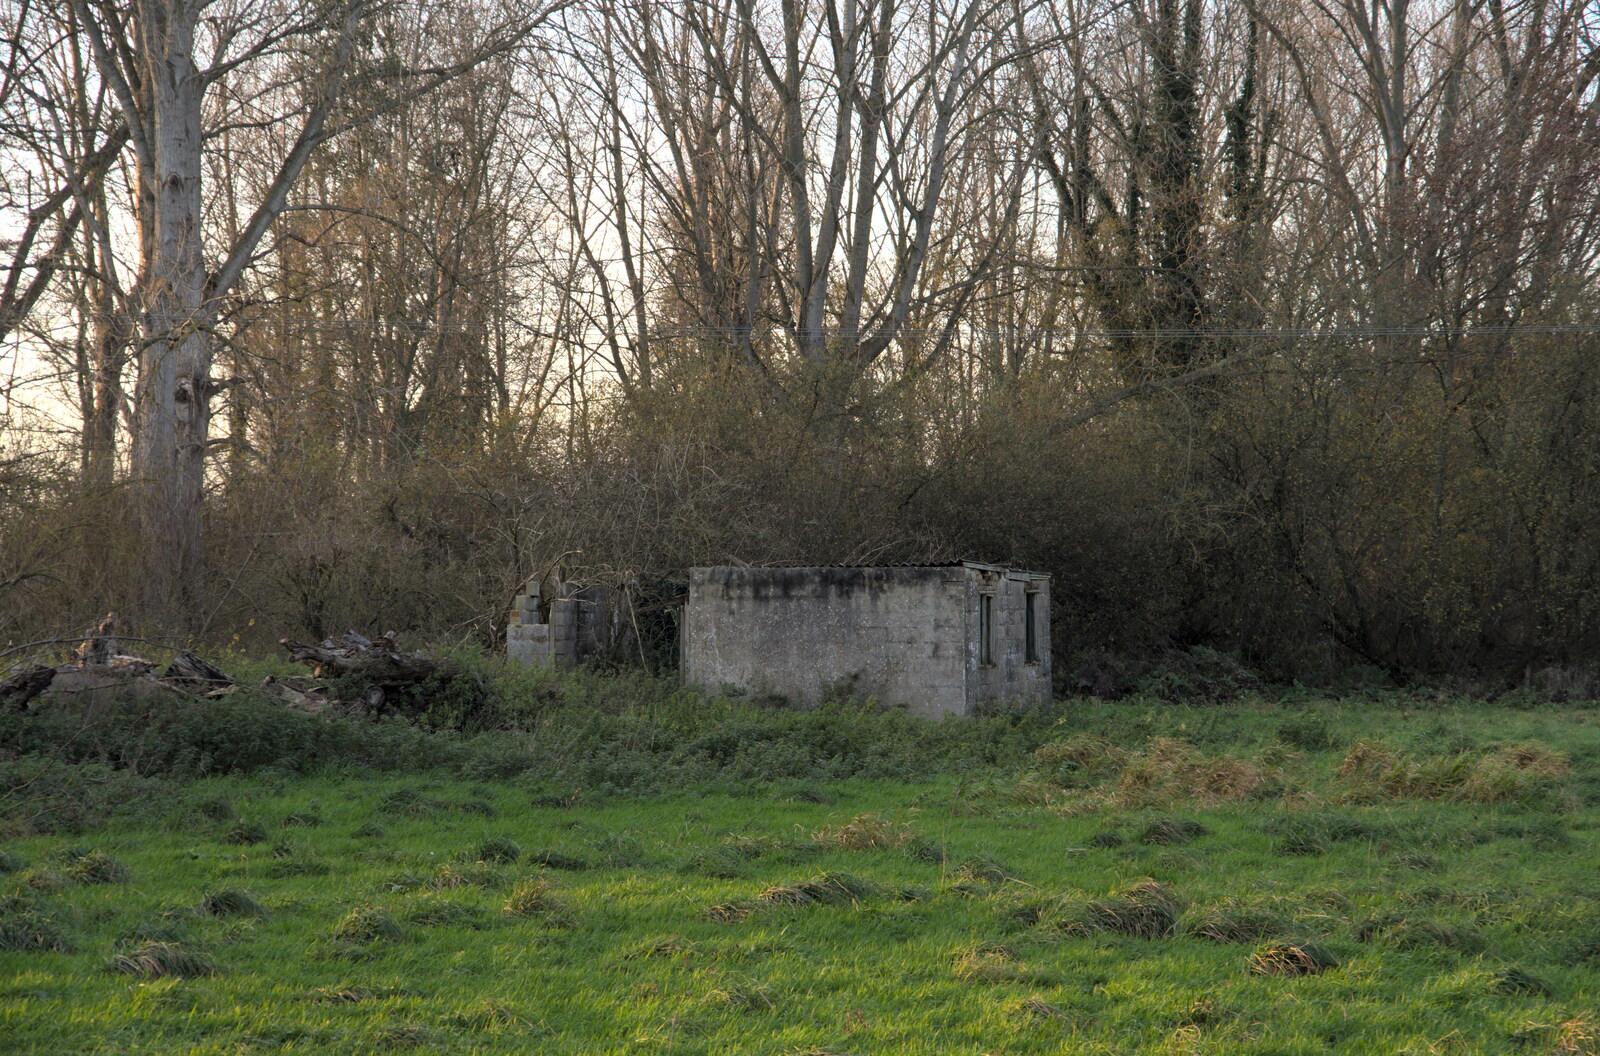 A derelict hut from The Dereliction of Eye, Suffolk - 22nd November 2020